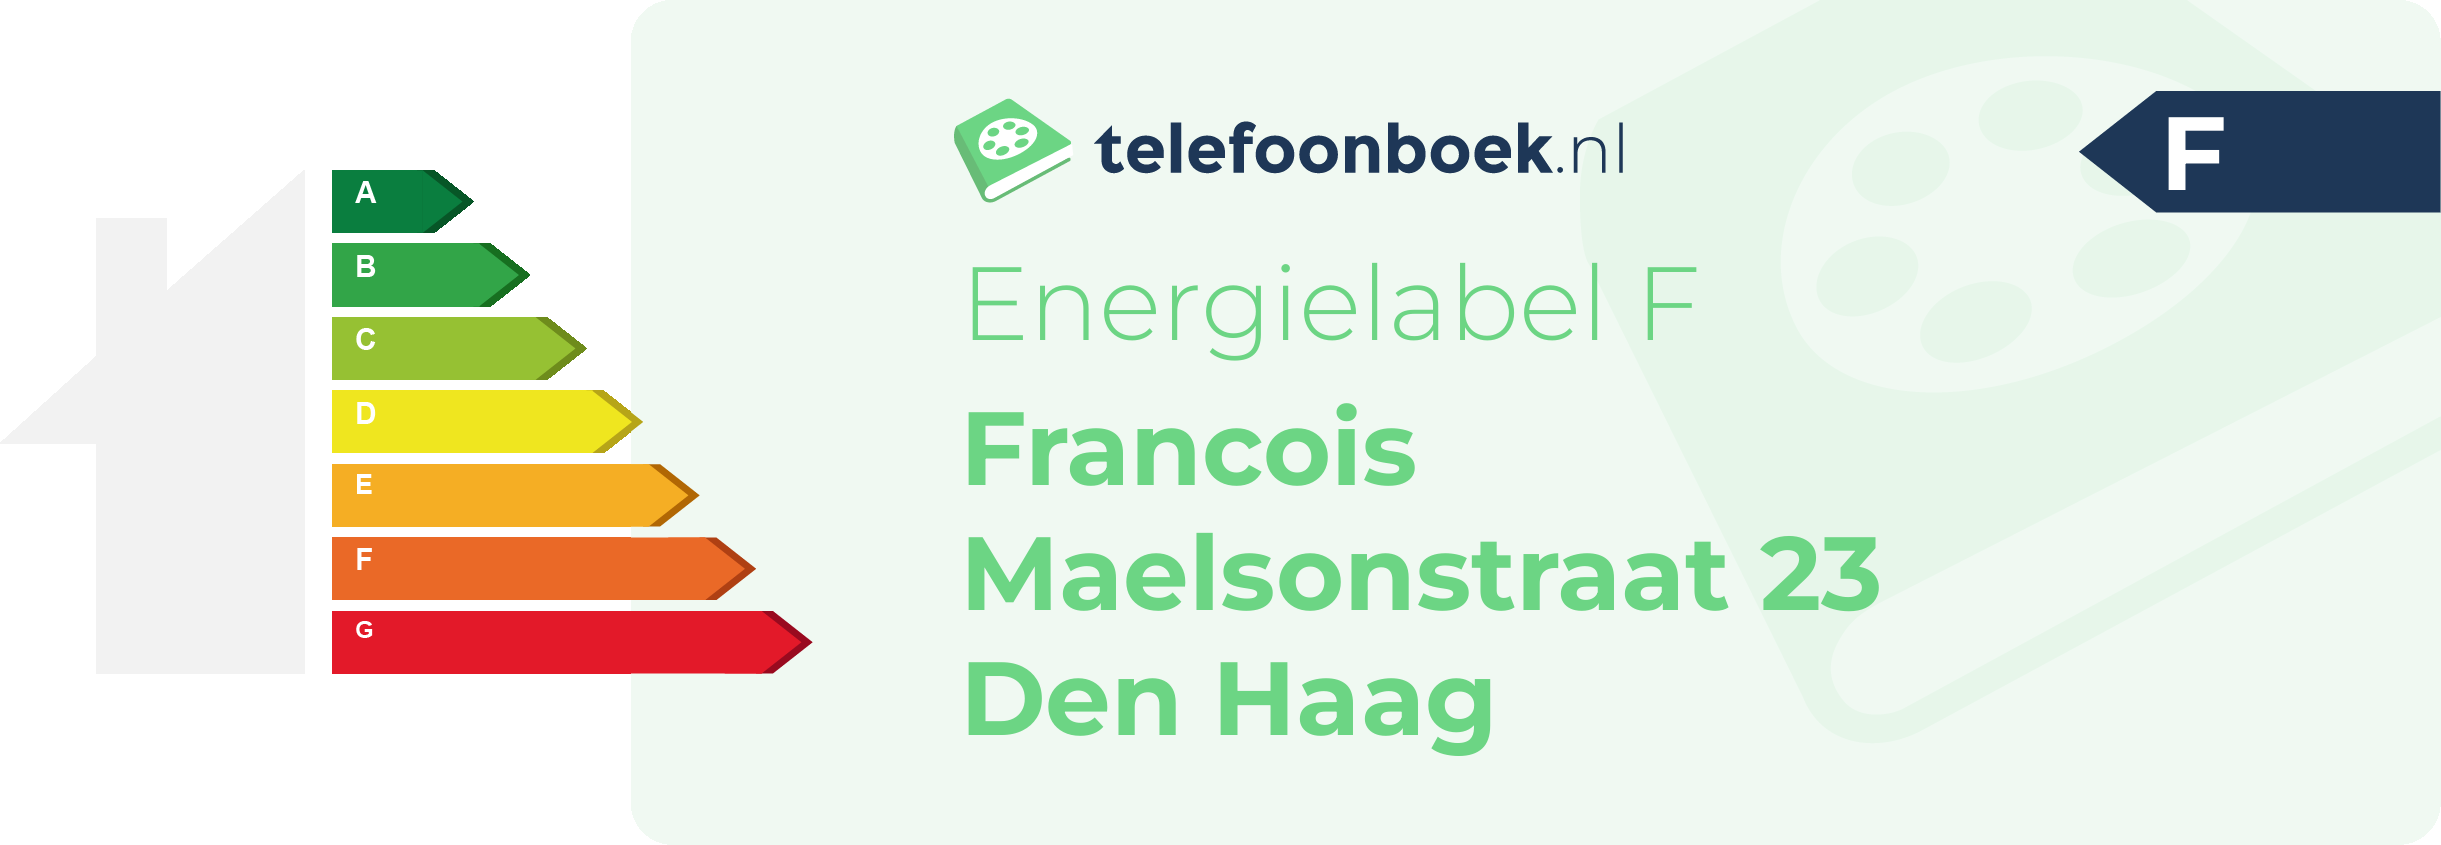 Energielabel Francois Maelsonstraat 23 Den Haag